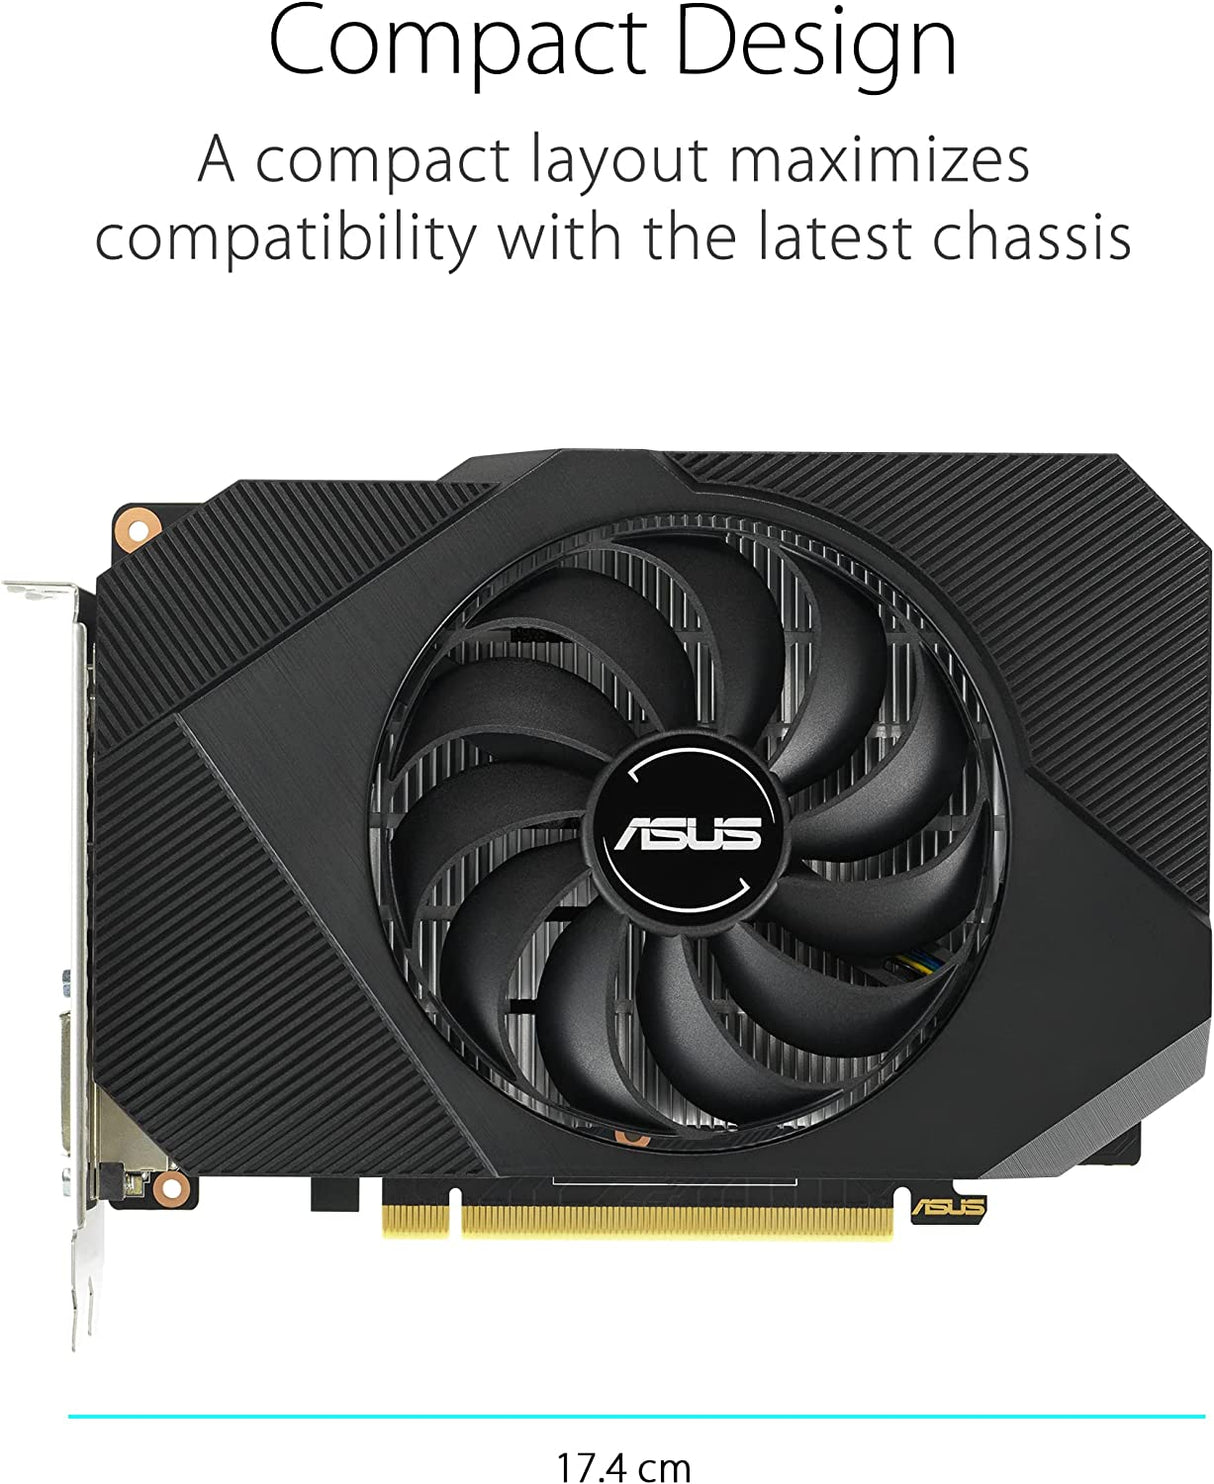 ASUS Phoenix NVIDIA GeForce GTX 1630 Gaming Graphics Card (PCIe 3.0, 4GB GDDR6 Memory, HDMI 2.0, DisplayPort 1.4a, DVI-D, Axial-tech Fan Design, Dual Ball Fan Bearings, Auto-Extreme)